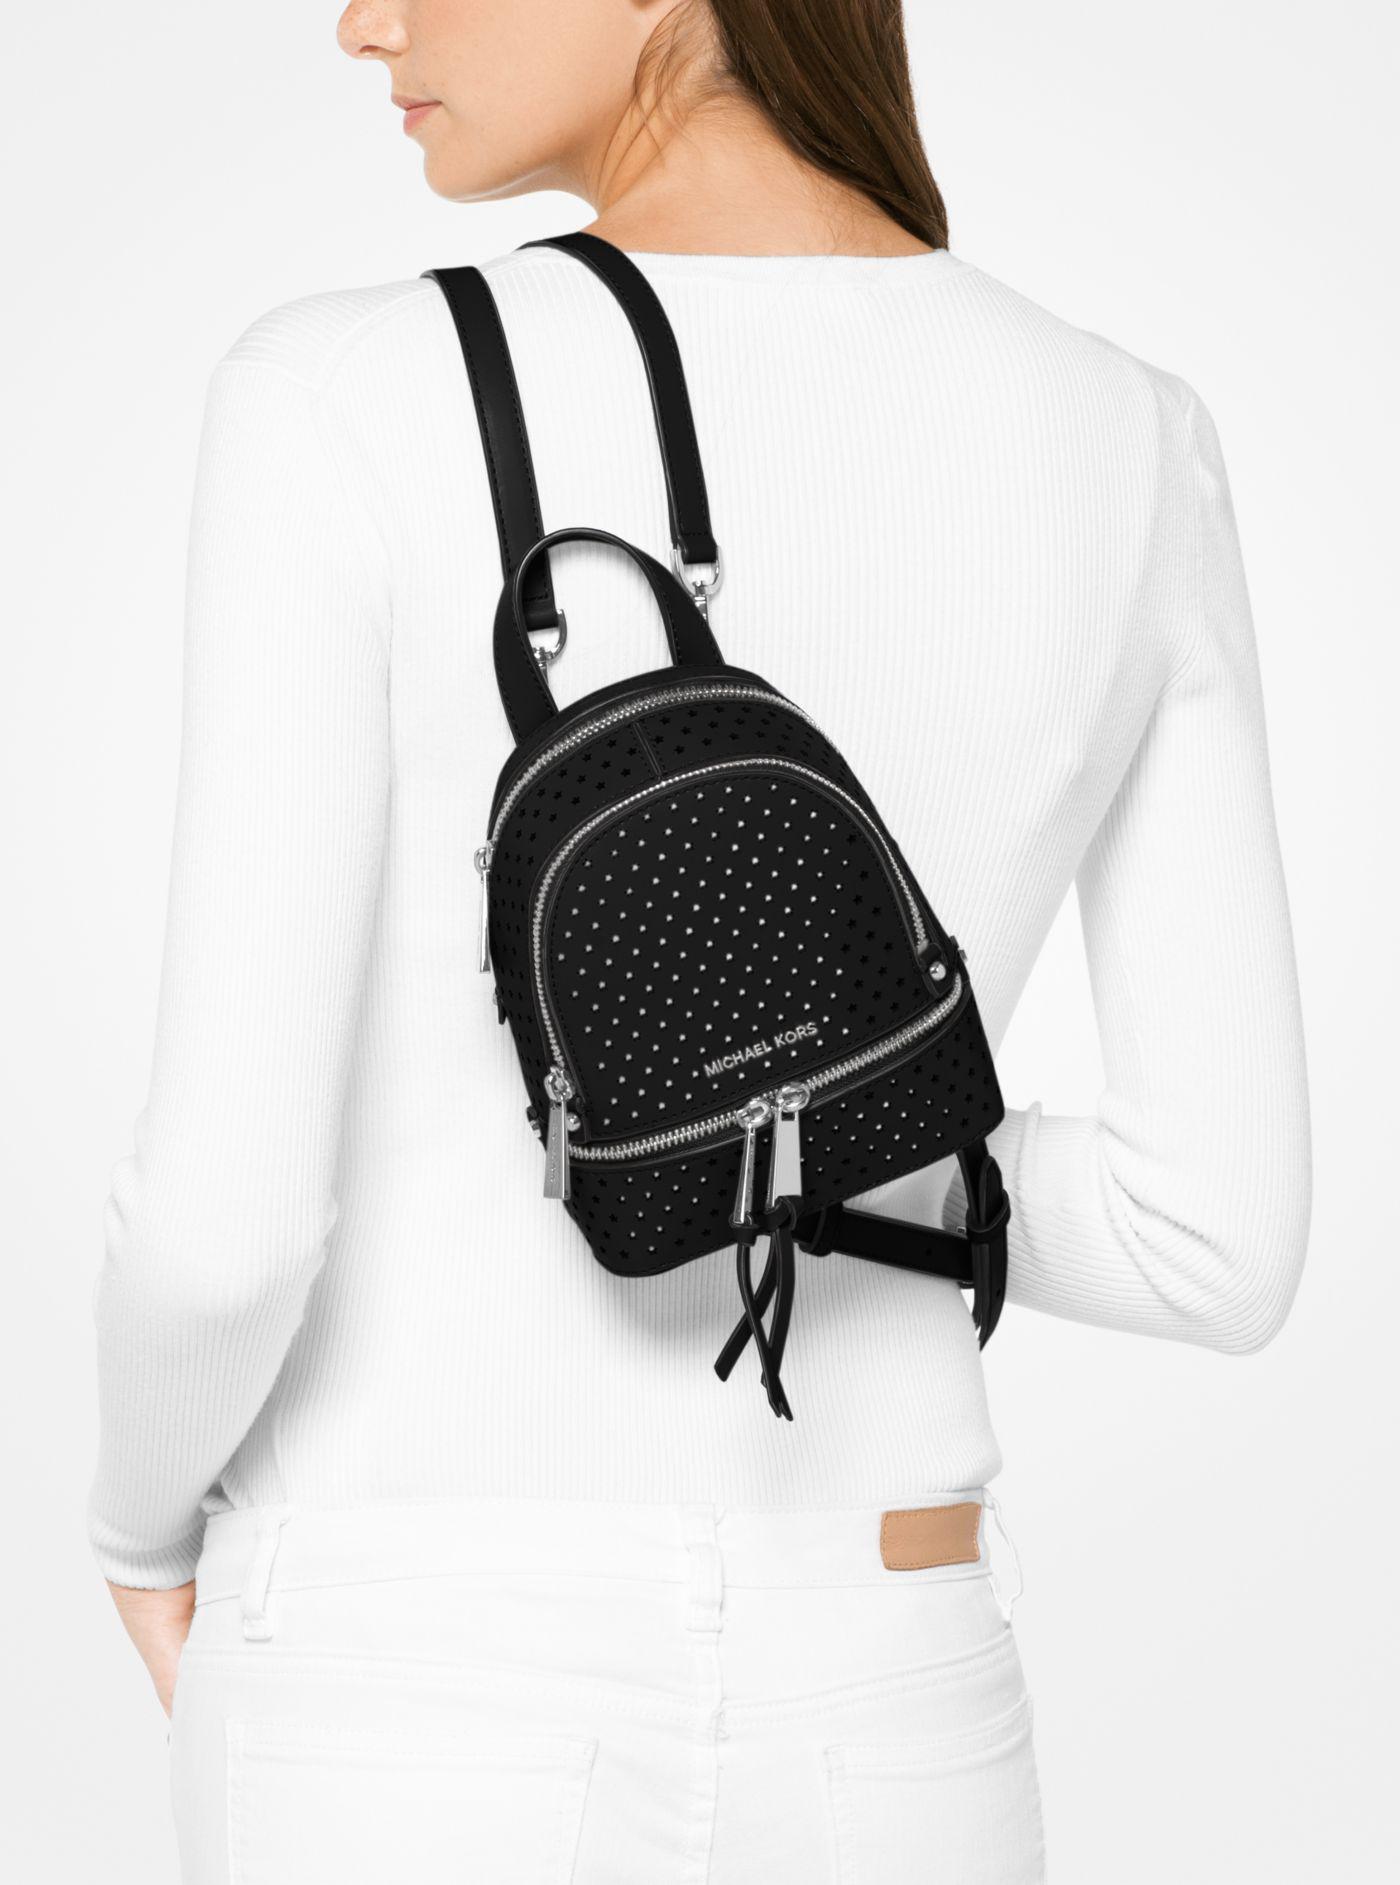 Michael Kors Rhea Mini Perforated Leather Backpack in Black | Lyst